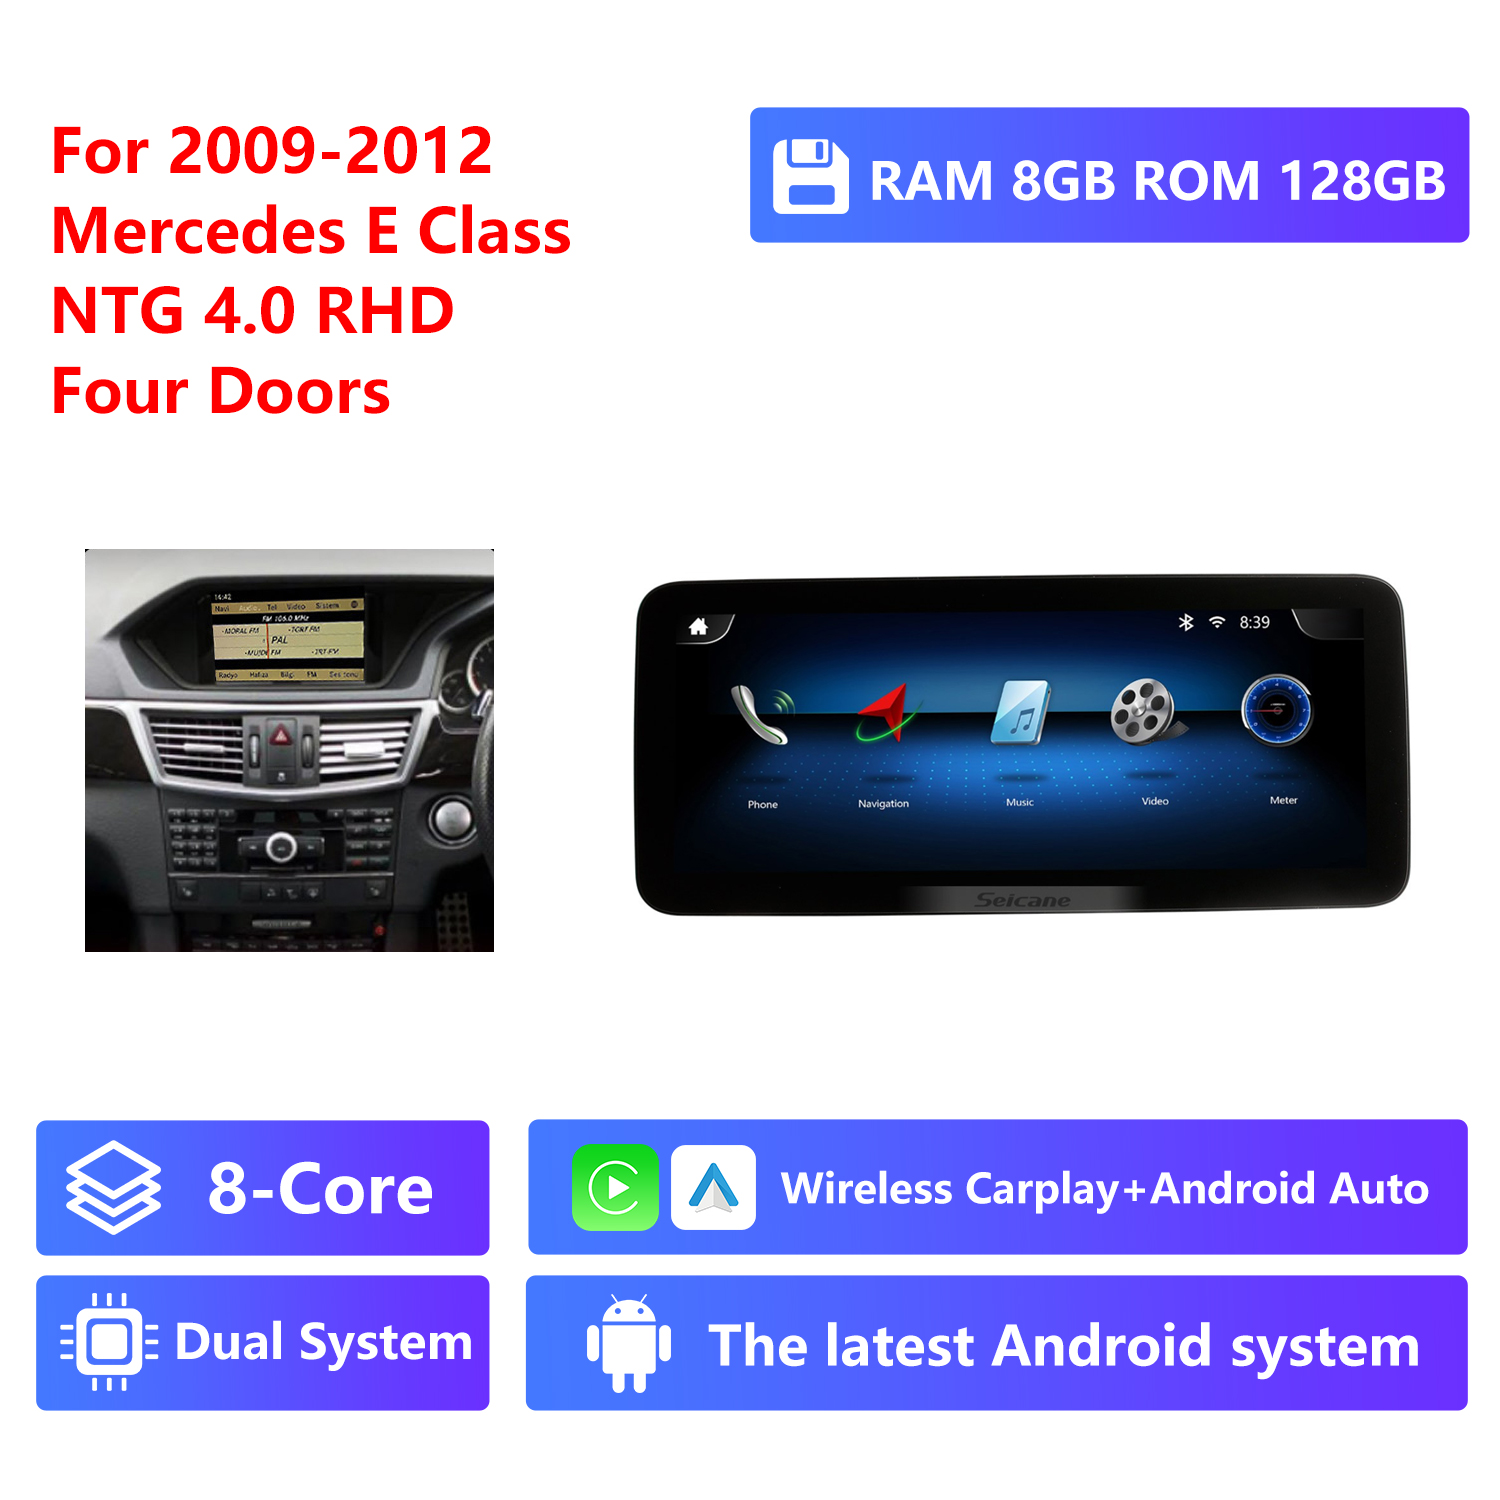 8-Core RAM 8G ROM 128G,RHD,NTG4.0,four doors